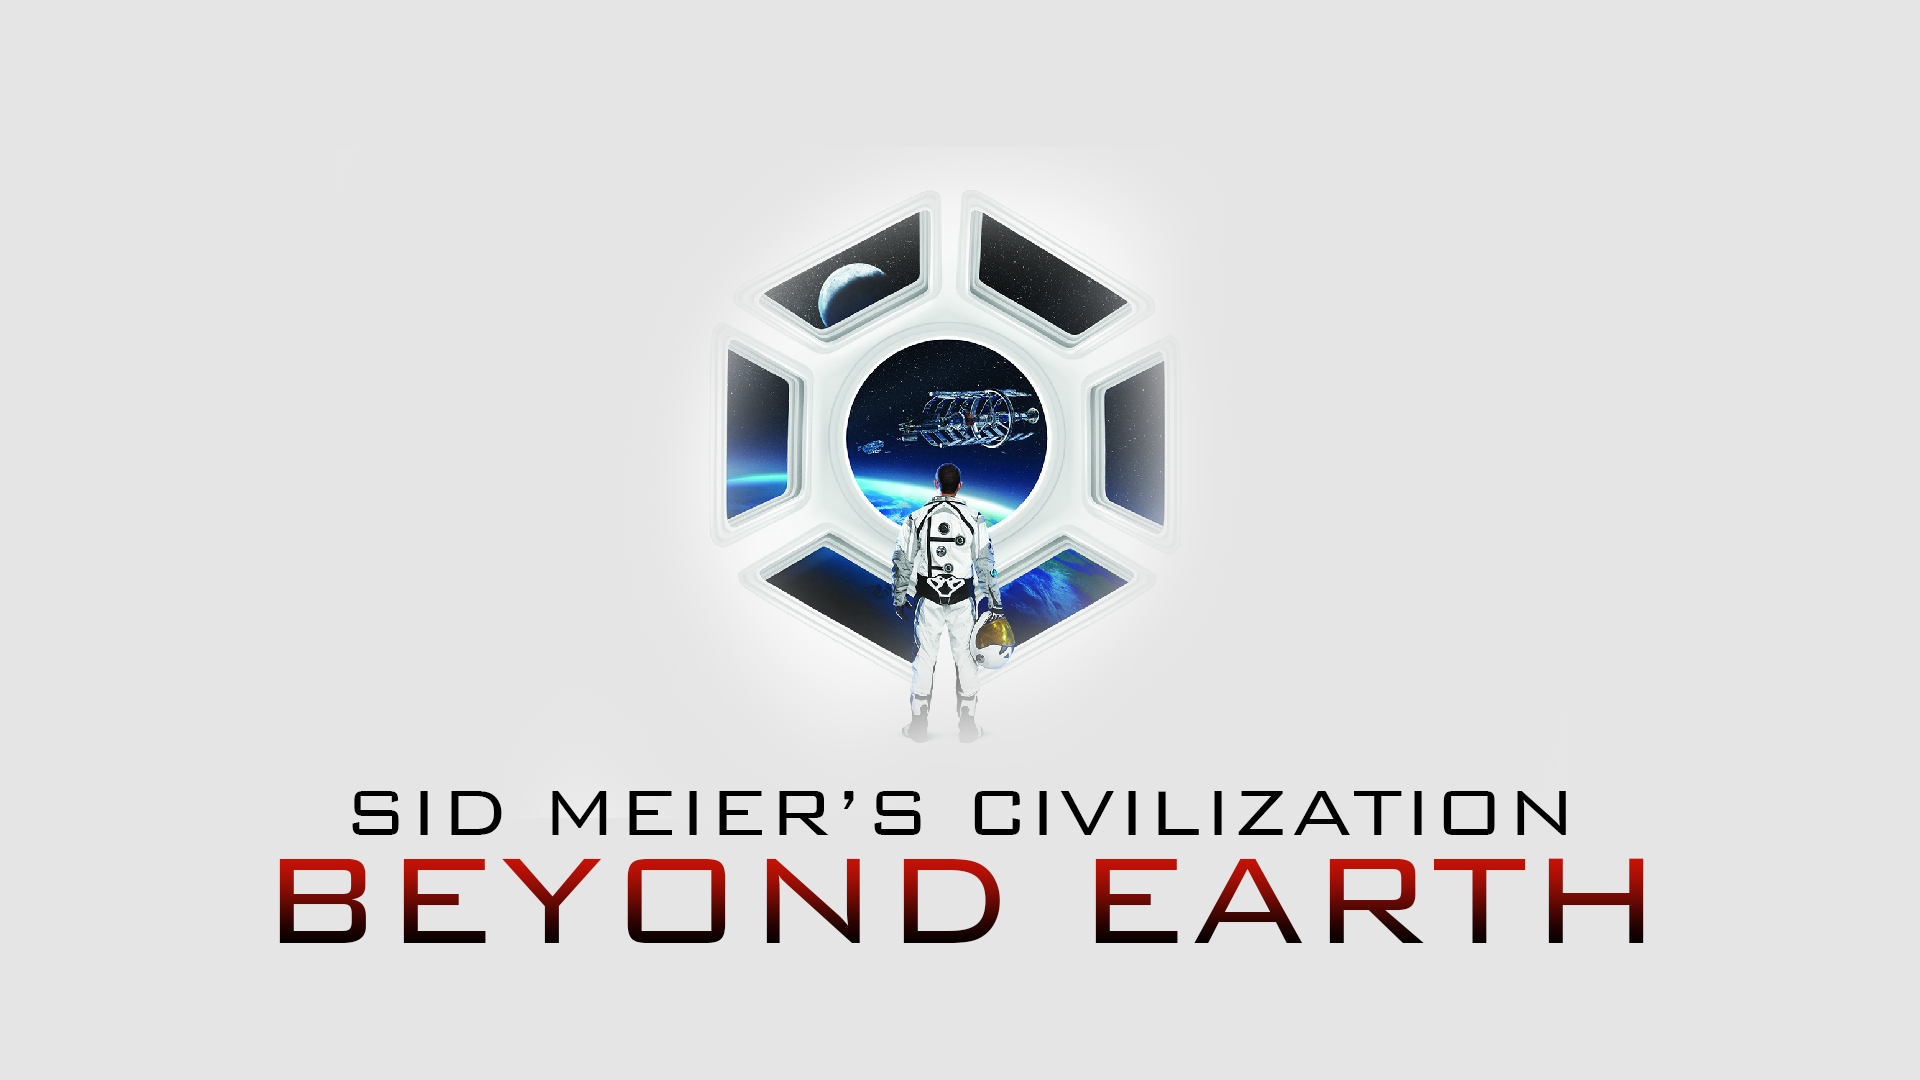 The Logo For Ddo Mer's Civilization Beyond Earth